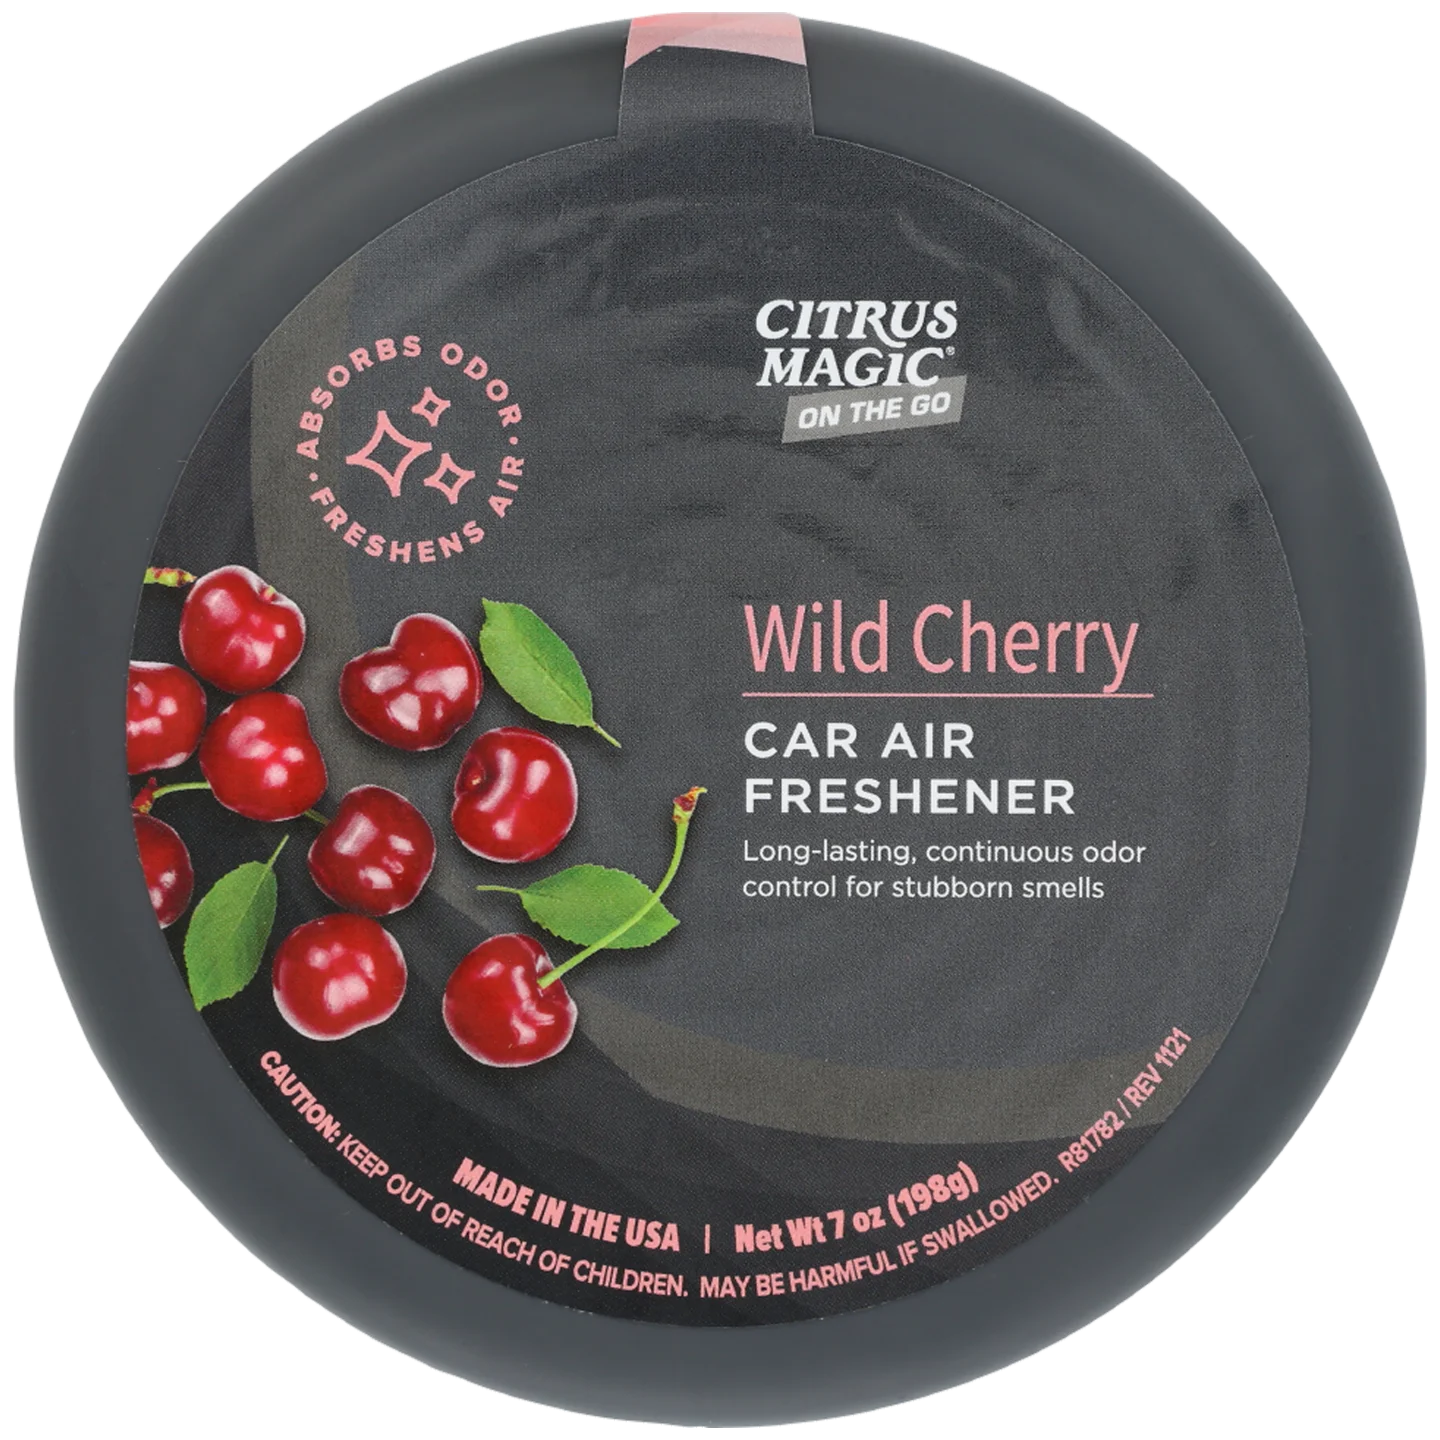 Car Air Freshener Jar - Organic 4 Scent Kitbubble Gum, Cherry, New